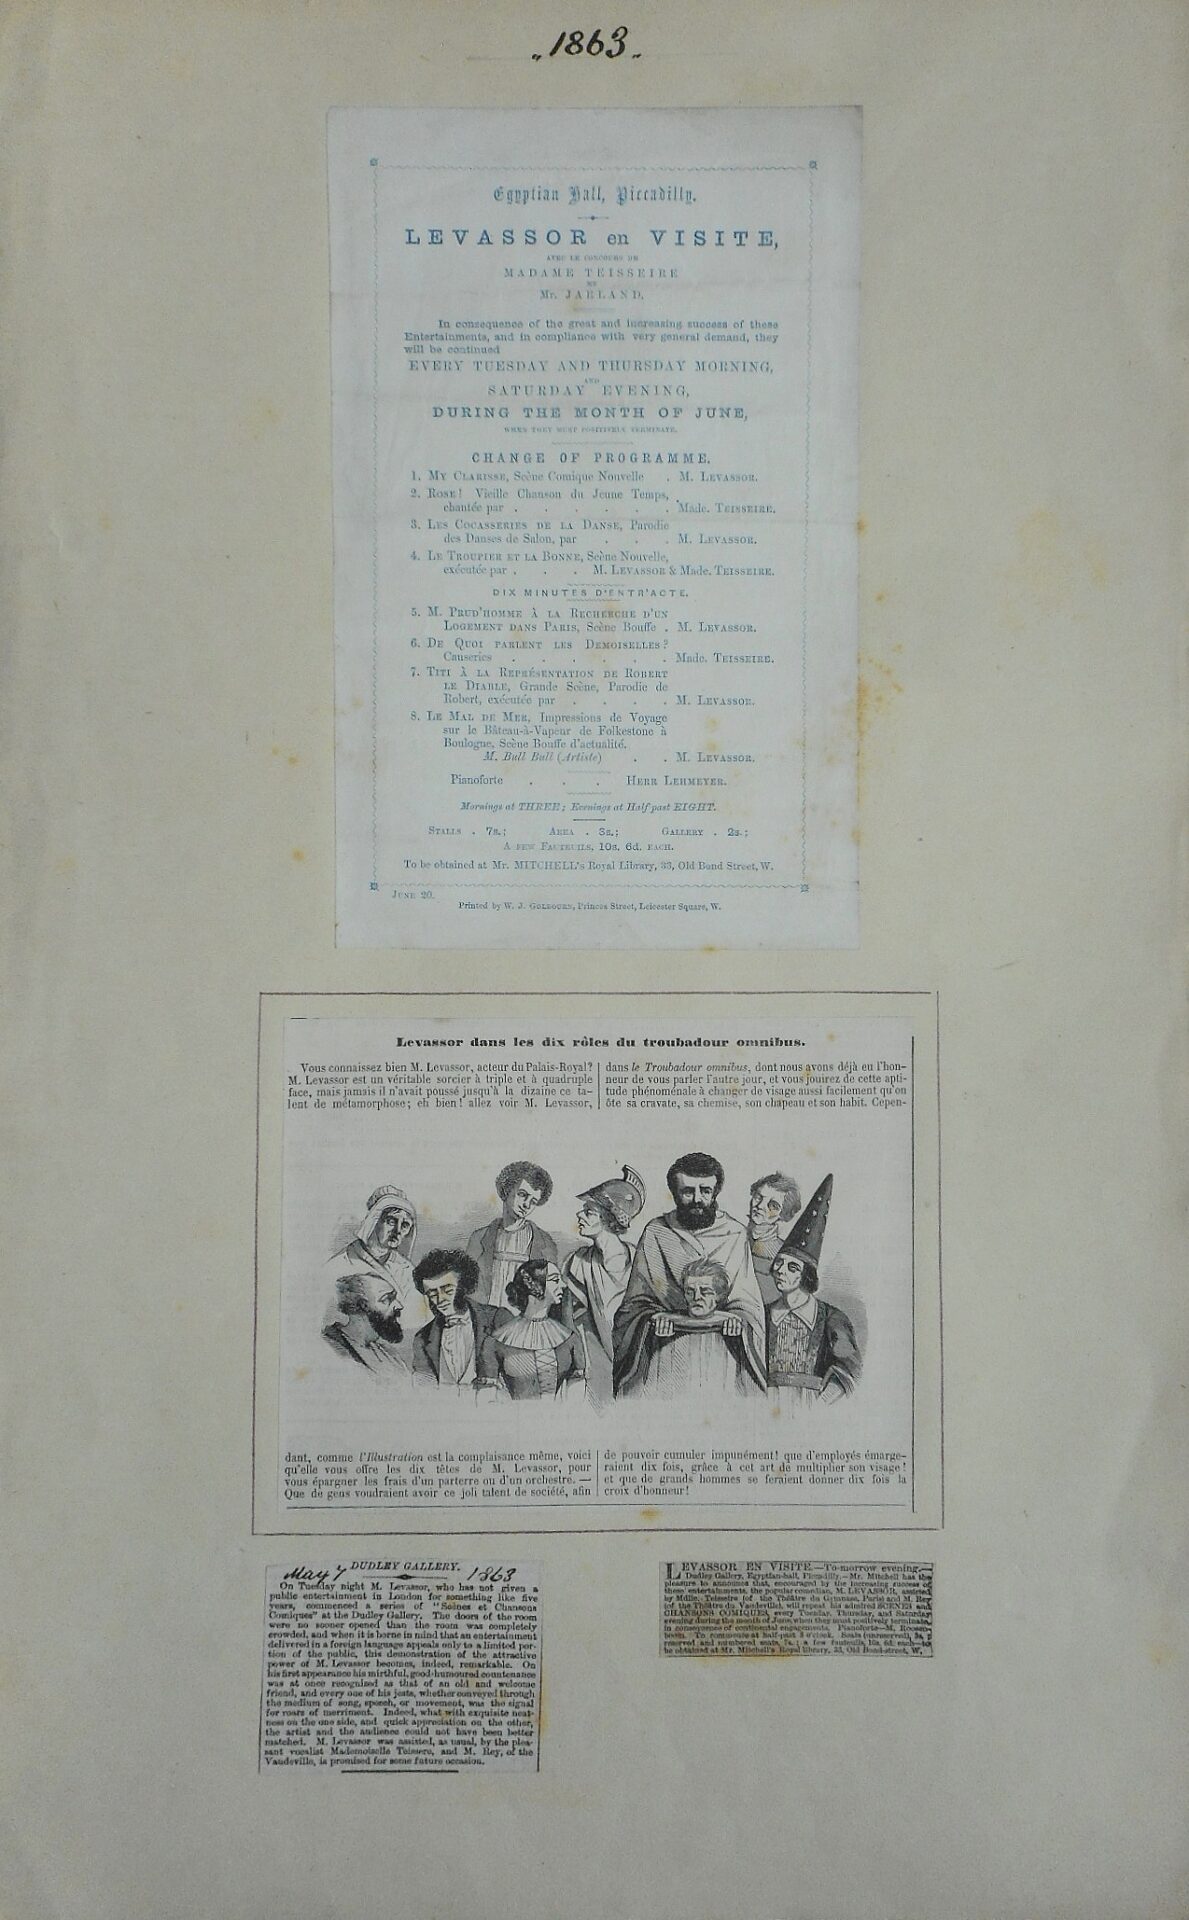 Monsieur Levassor with his ‘Scènes et Chansons Comiques’ at the Egyptian Hall, 1863